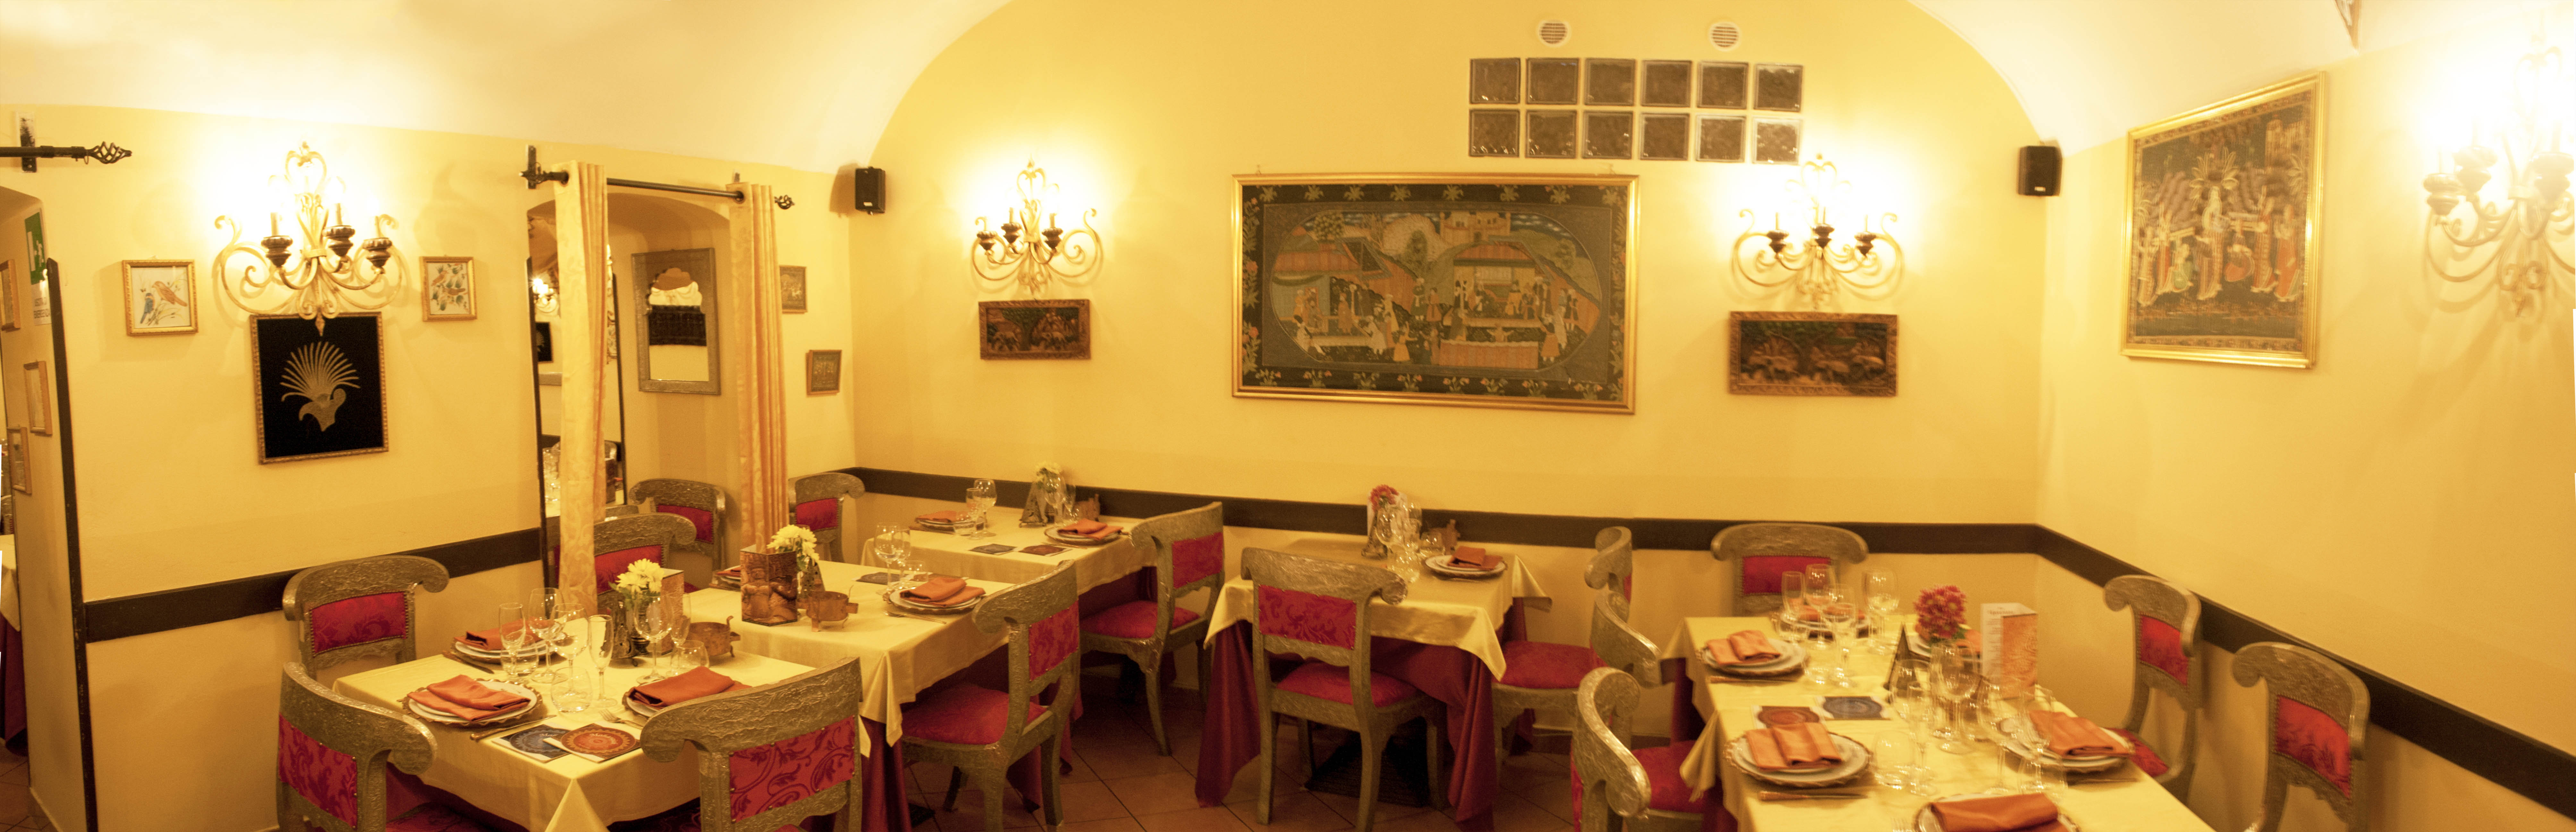 Restaurant Maharajah Indian Restaurant In Rome